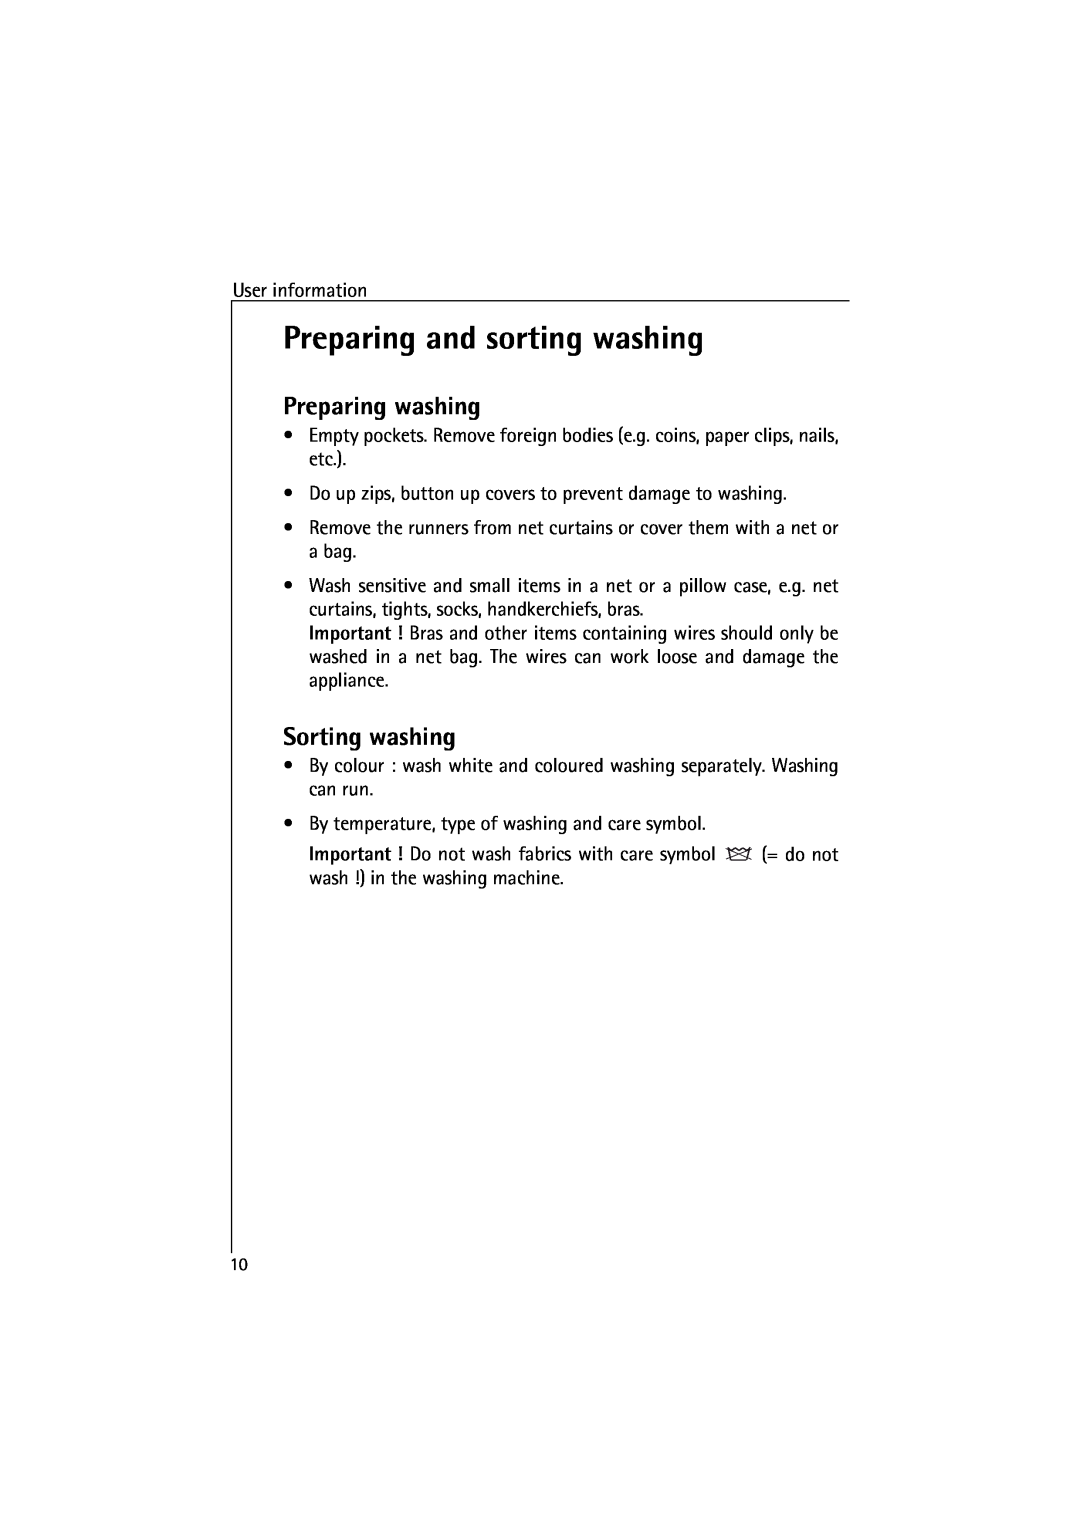 AEG 48380 manual Preparing and sorting washing, Preparing washing, Sorting washing 